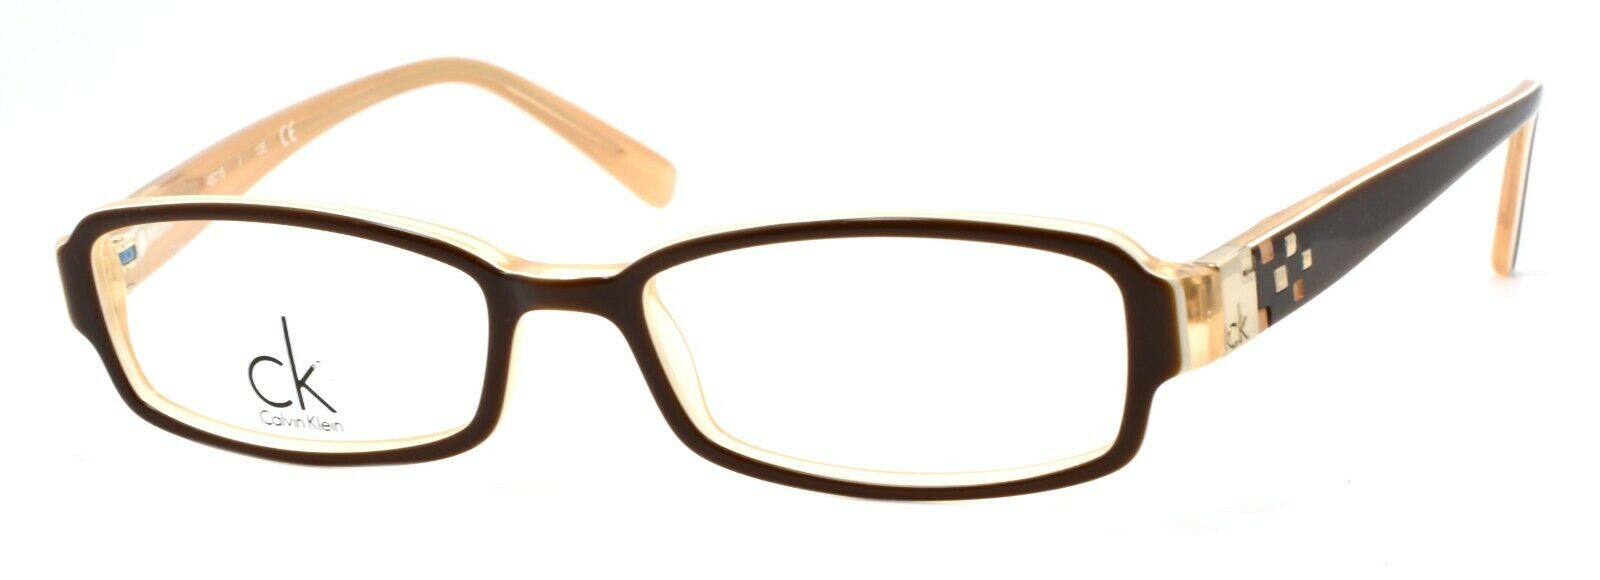 1-Calvin Klein CK5689 213 Eyeglasses Frames PETITE 48-16-135 Brown / Peach-750778375236-IKSpecs